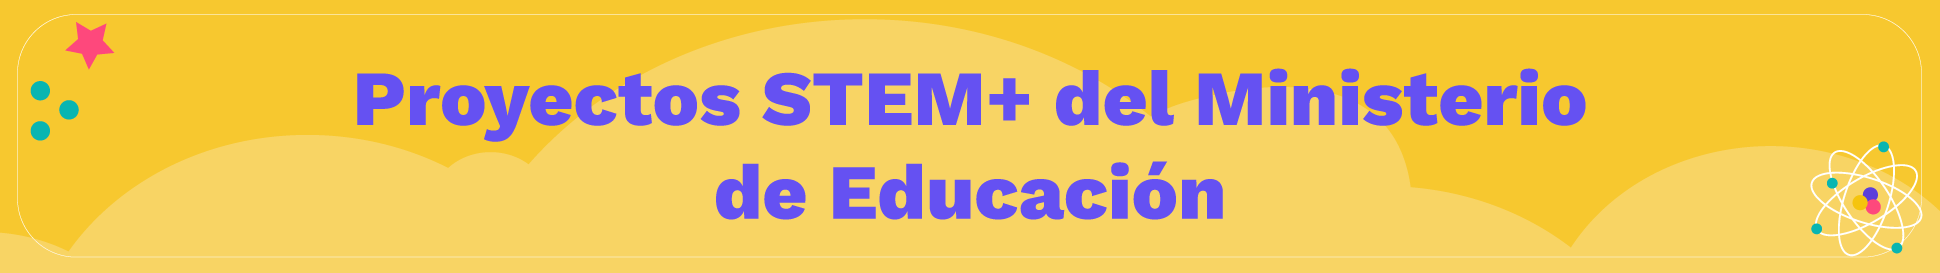 Banner proyectos STEM+ Ministerio de Educación